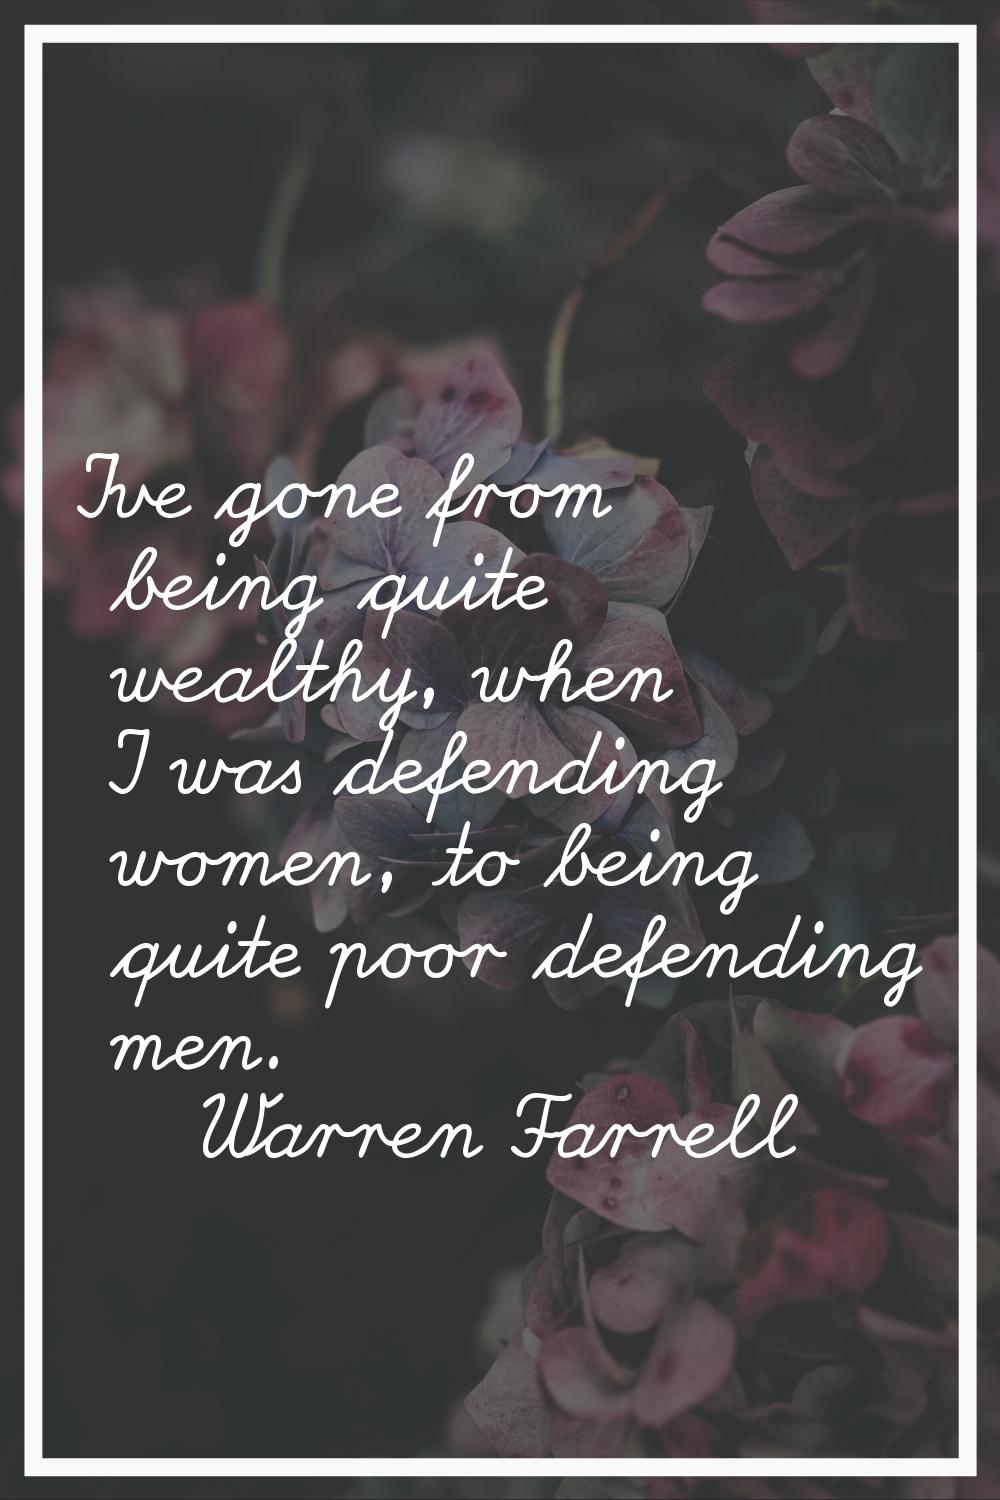 I've gone from being quite wealthy, when I was defending women, to being quite poor defending men.